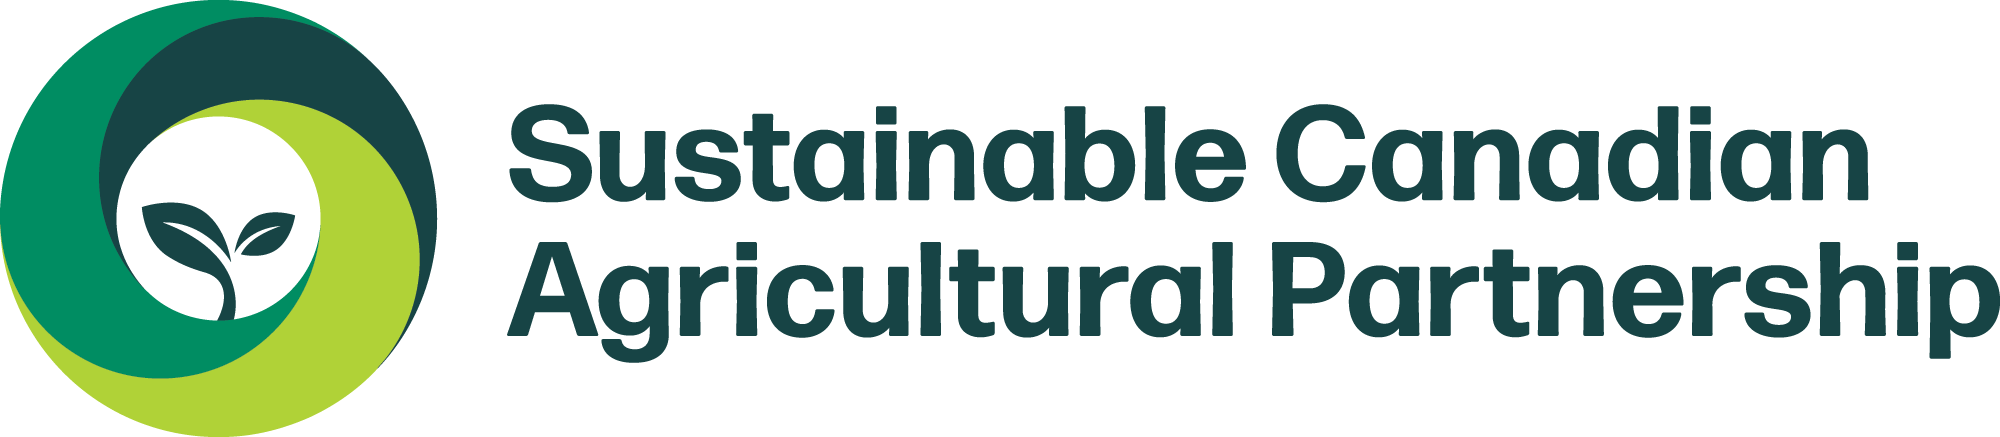 Canadian Agriculture Partnership Logo